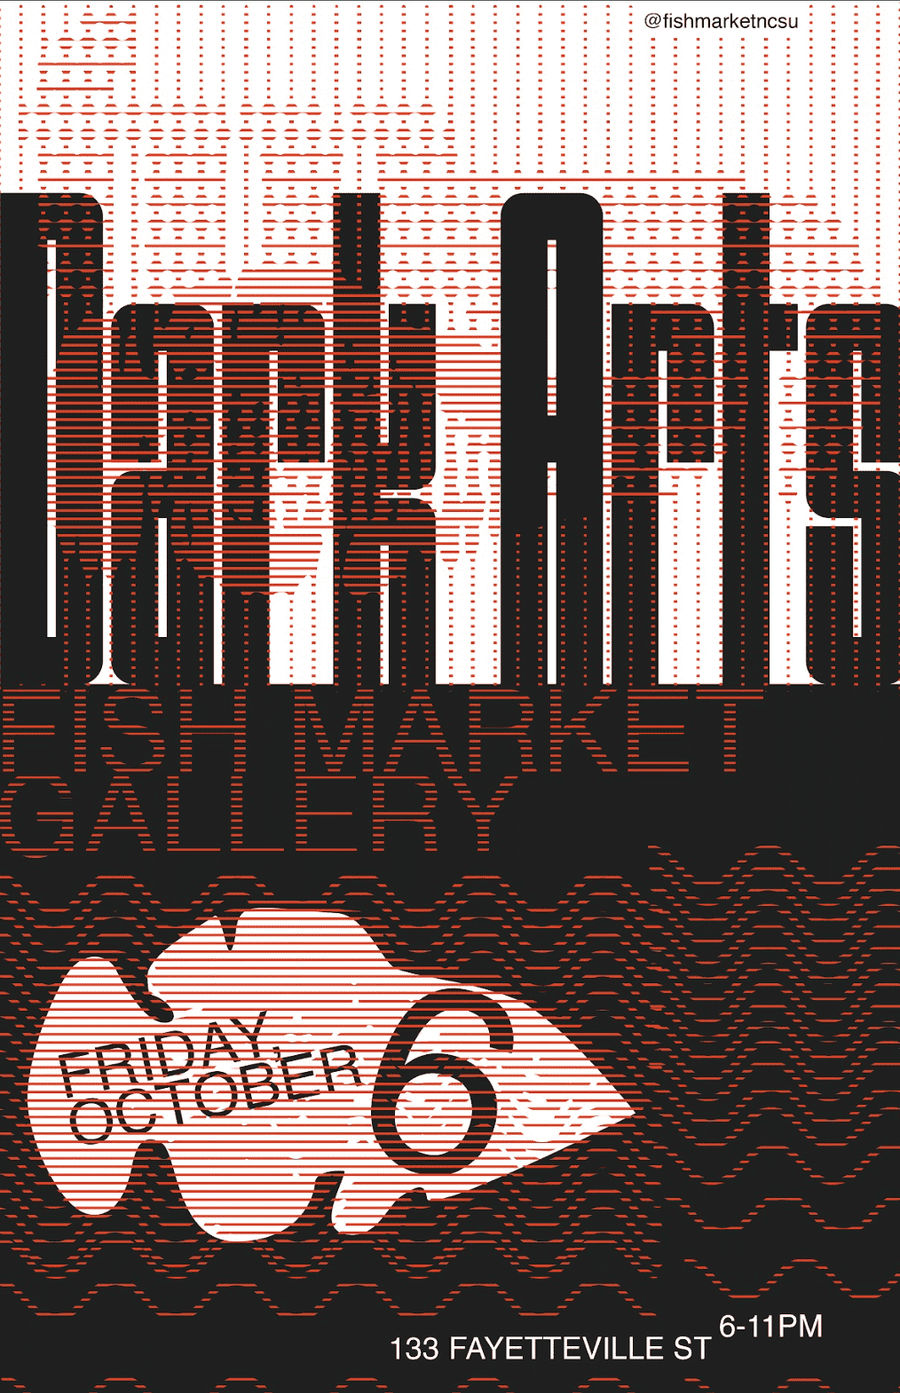 Fish Market Gallery